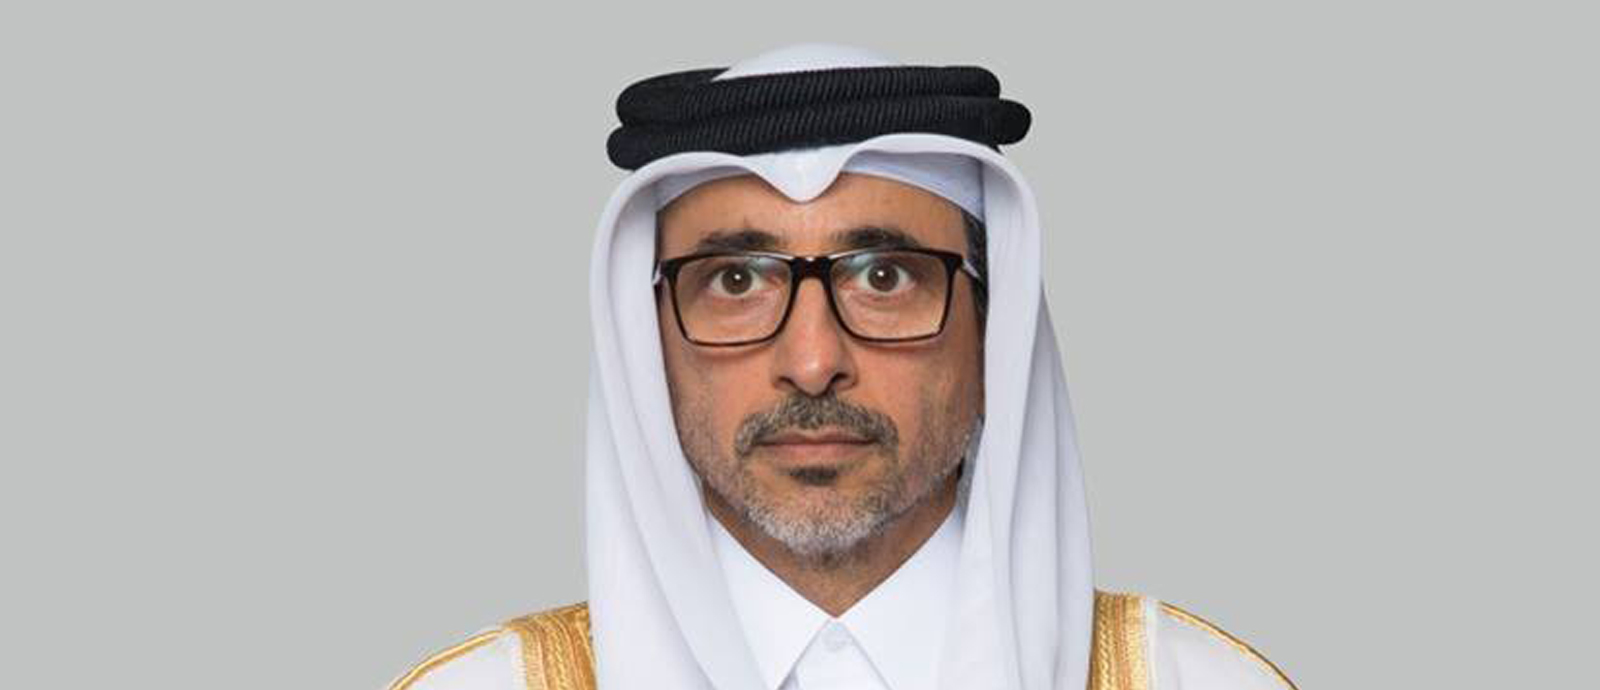 HE Minister of Sports and Youth Salah bin Ghanem Al Ali